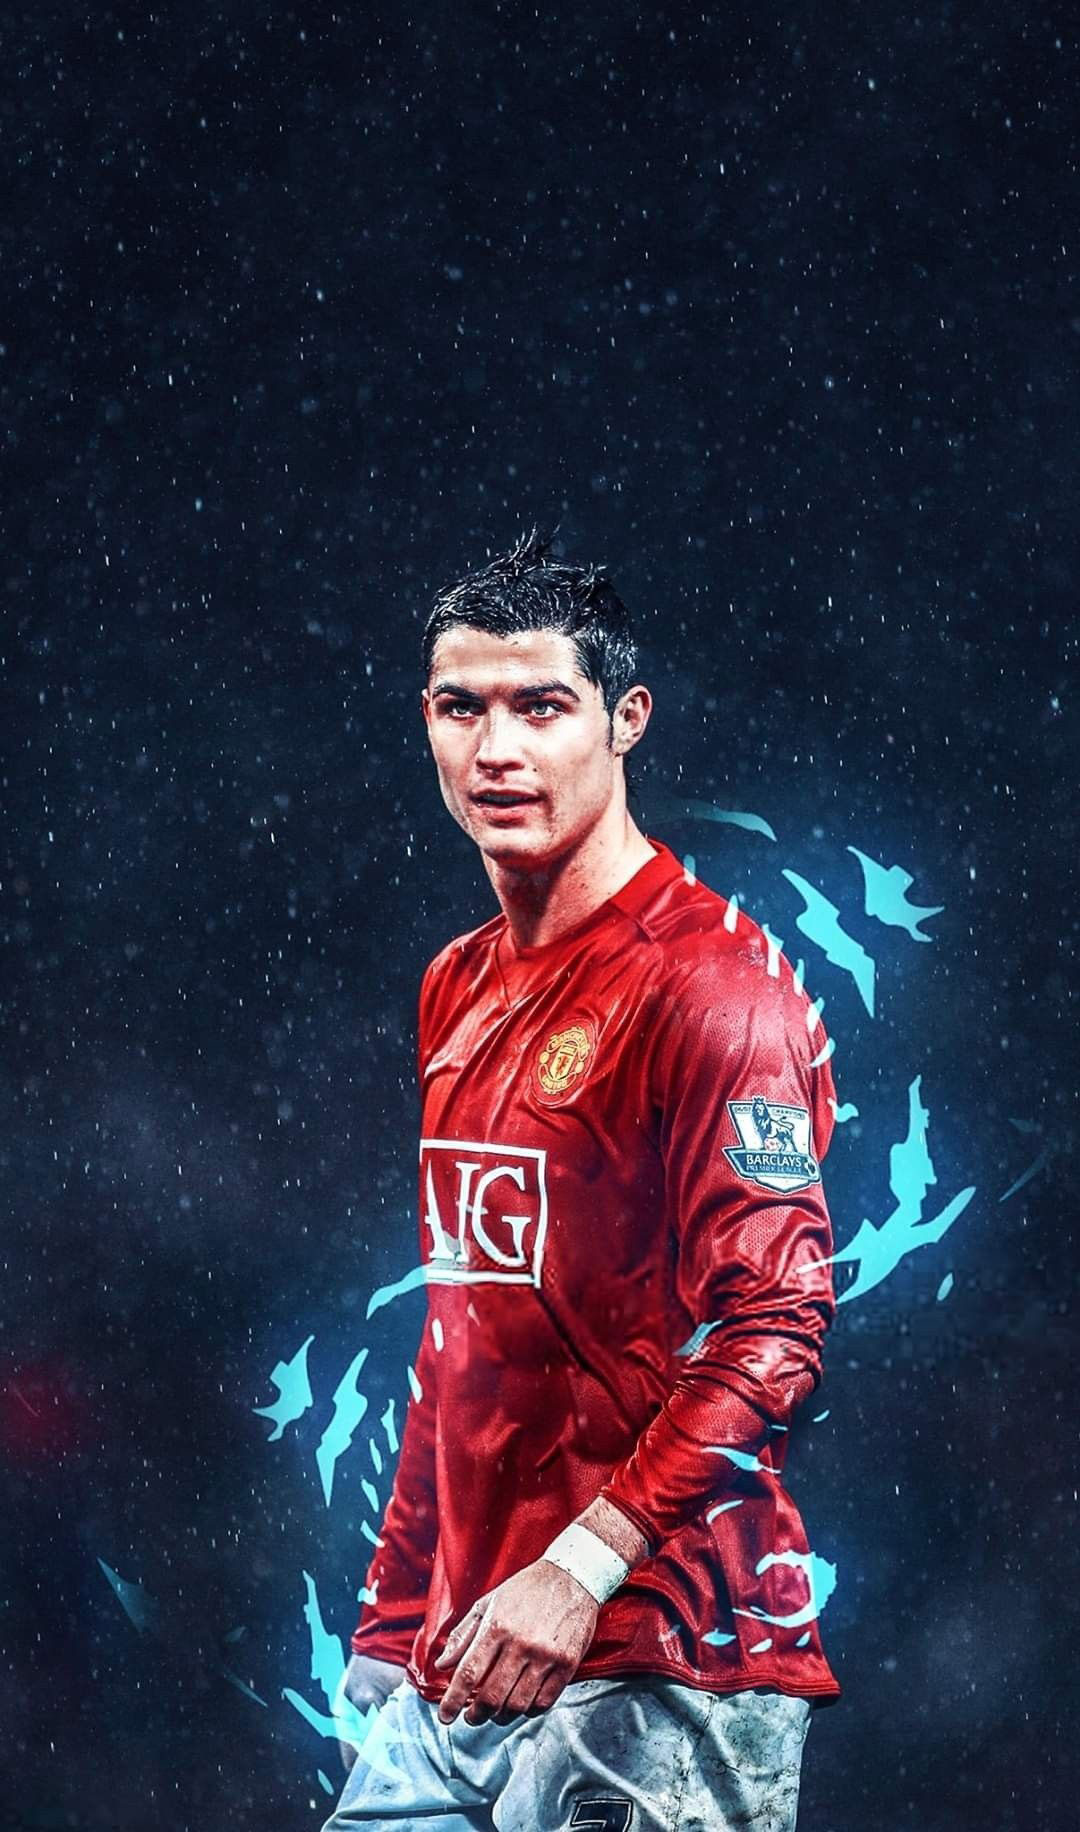 Ronaldo Best Footballer IPhone Wallpaper  IPhone Wallpapers  iPhone  Wallpapers